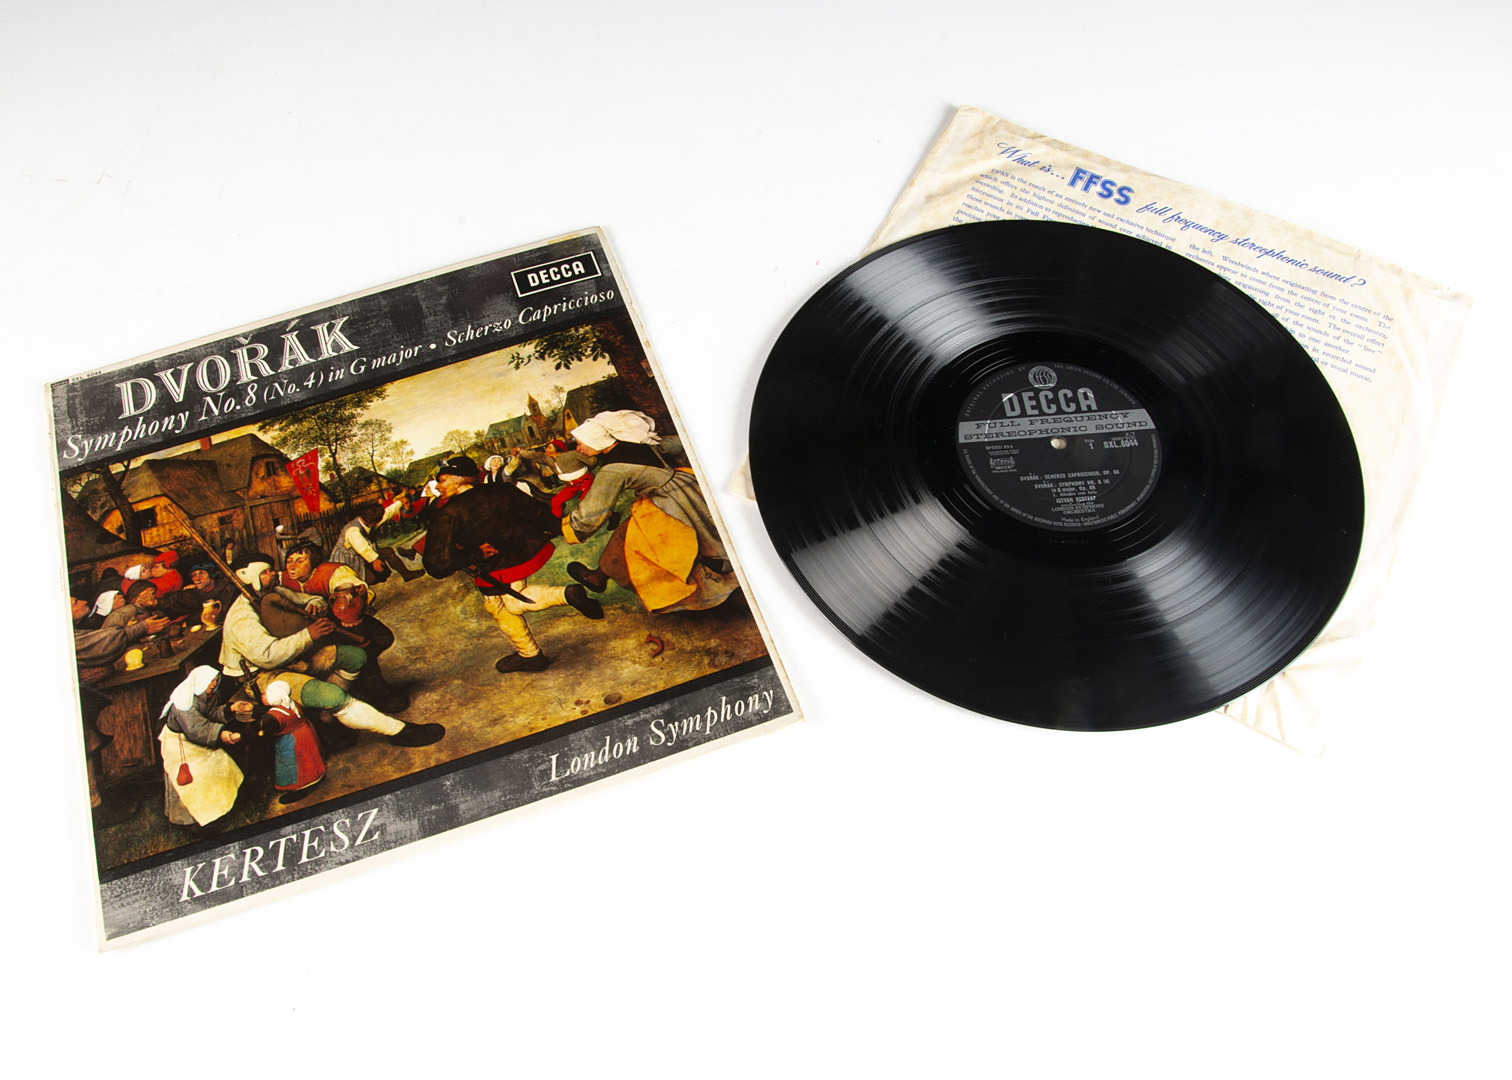 Classical LP / SXL 6044, Dvorak - Symphony No 8 in G major LP - Original UK ED 1 Stereo release 1963